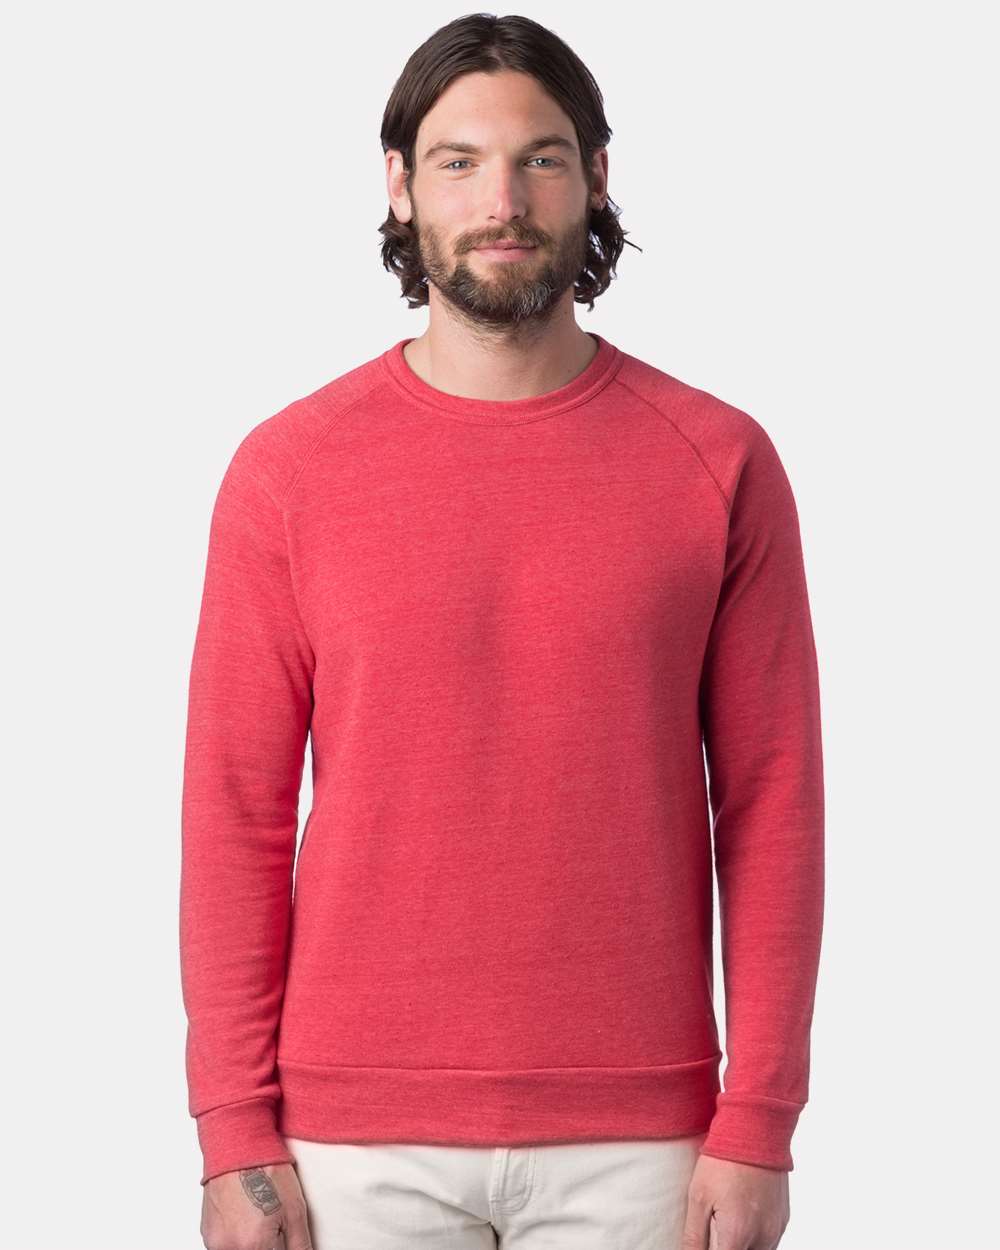 Alternative Champ Eco-Fleece Crewneck Sweatshirt 9575 #colormdl_Eco True Red